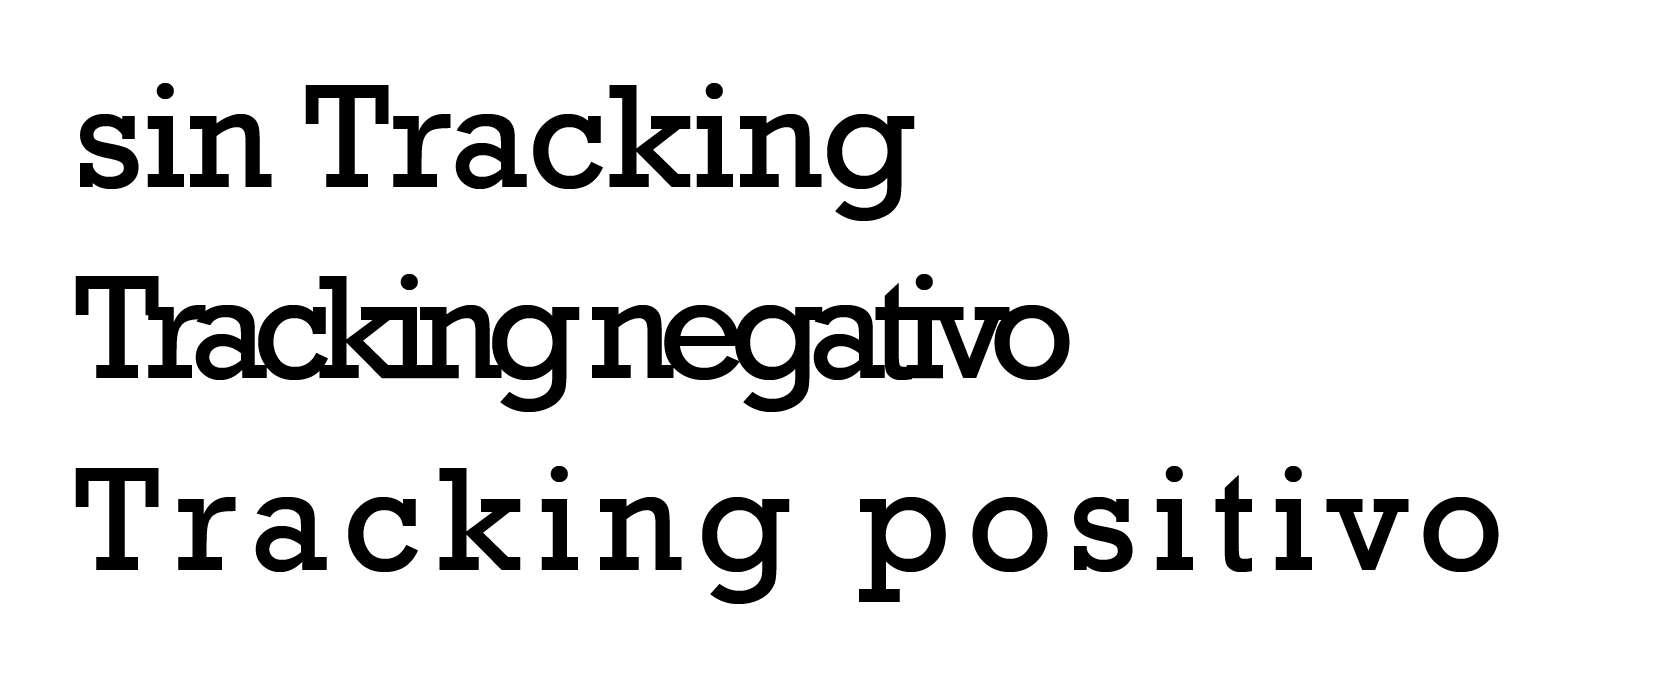 tracking positivo y tracking negativo